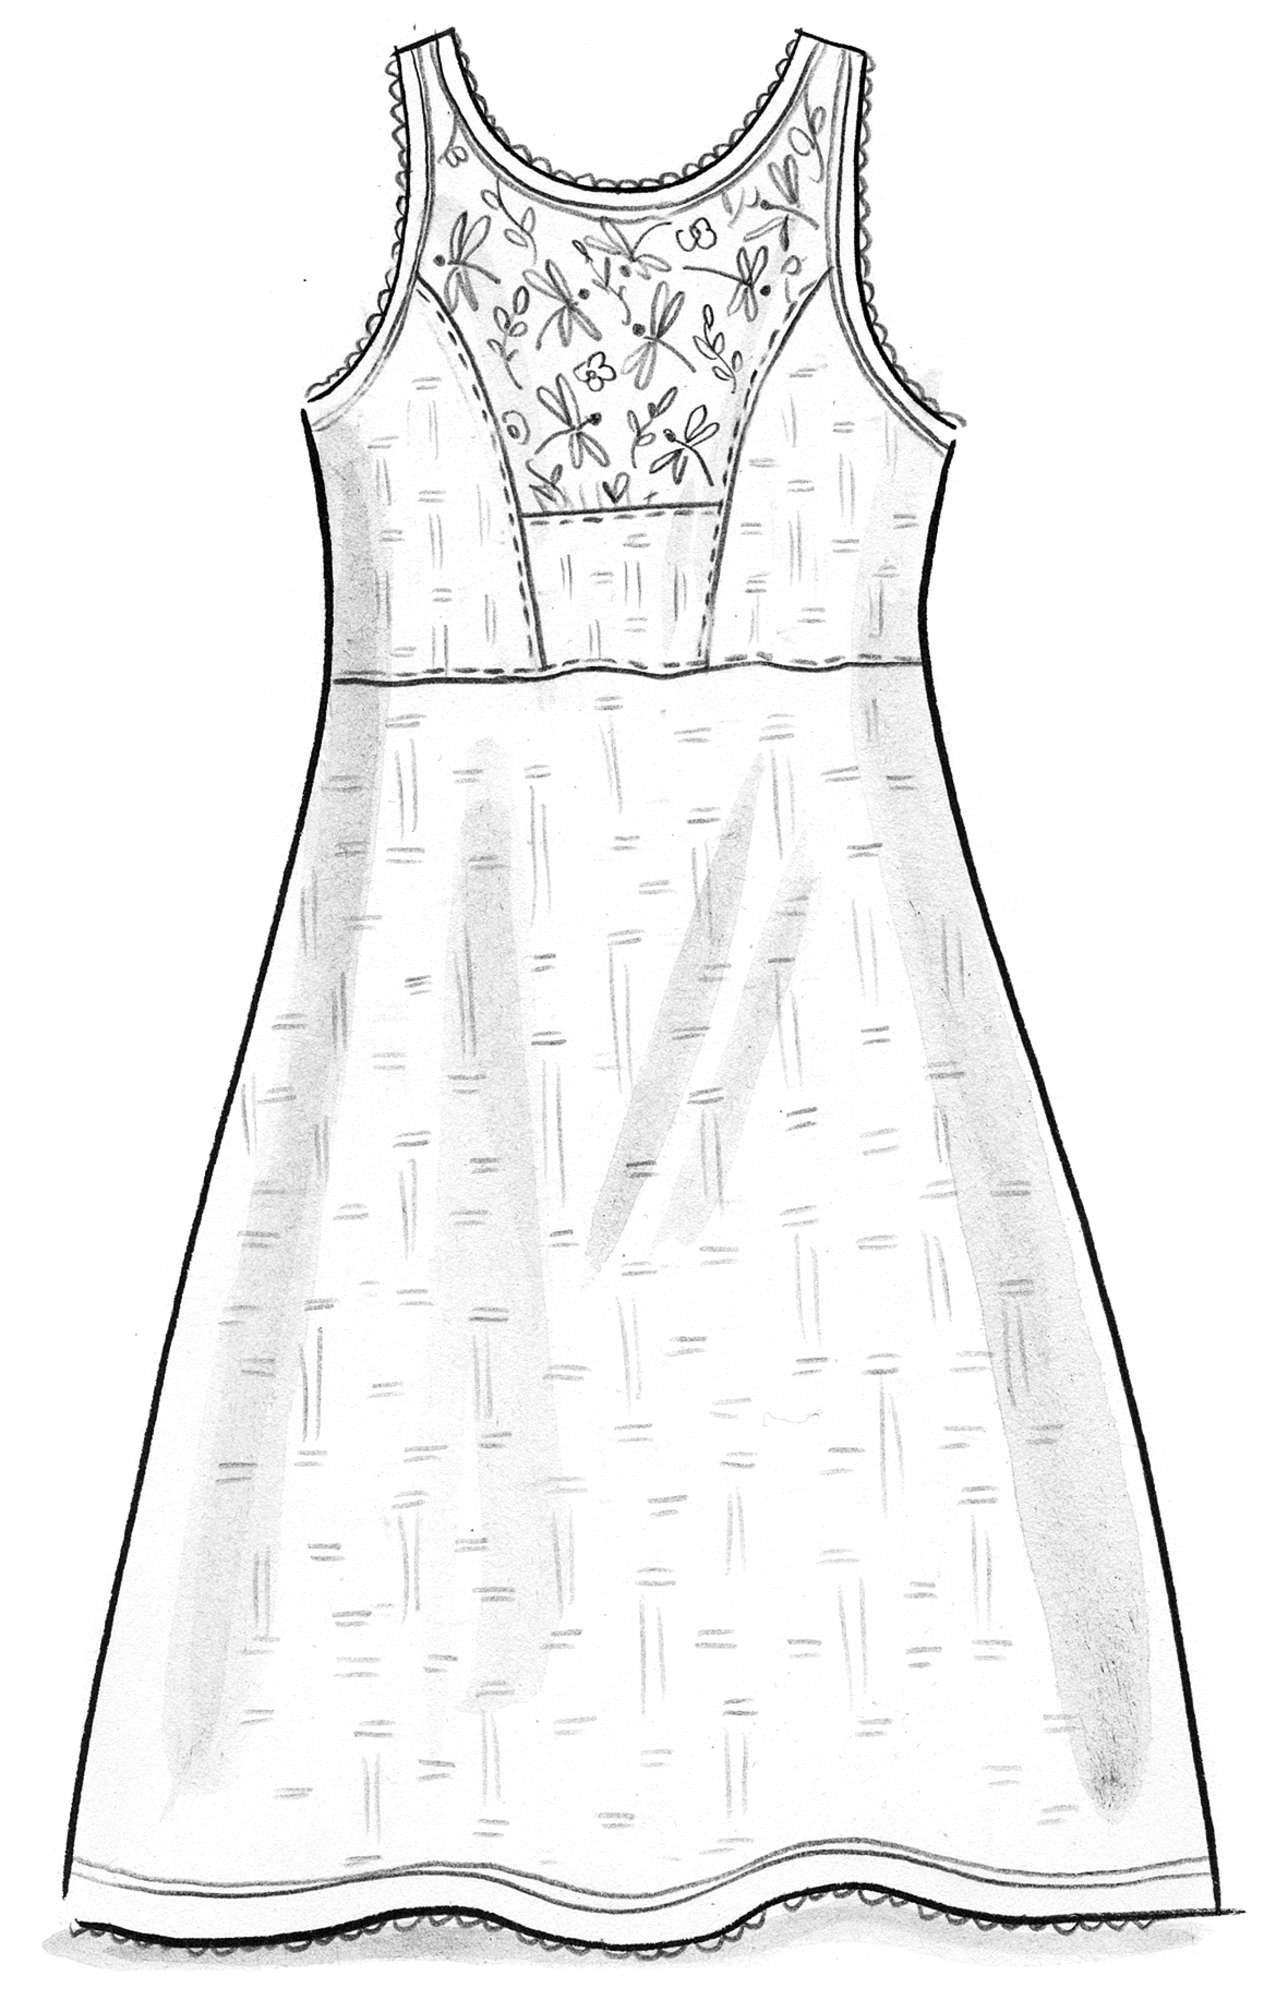 Pointelle dress in organic cotton/modal